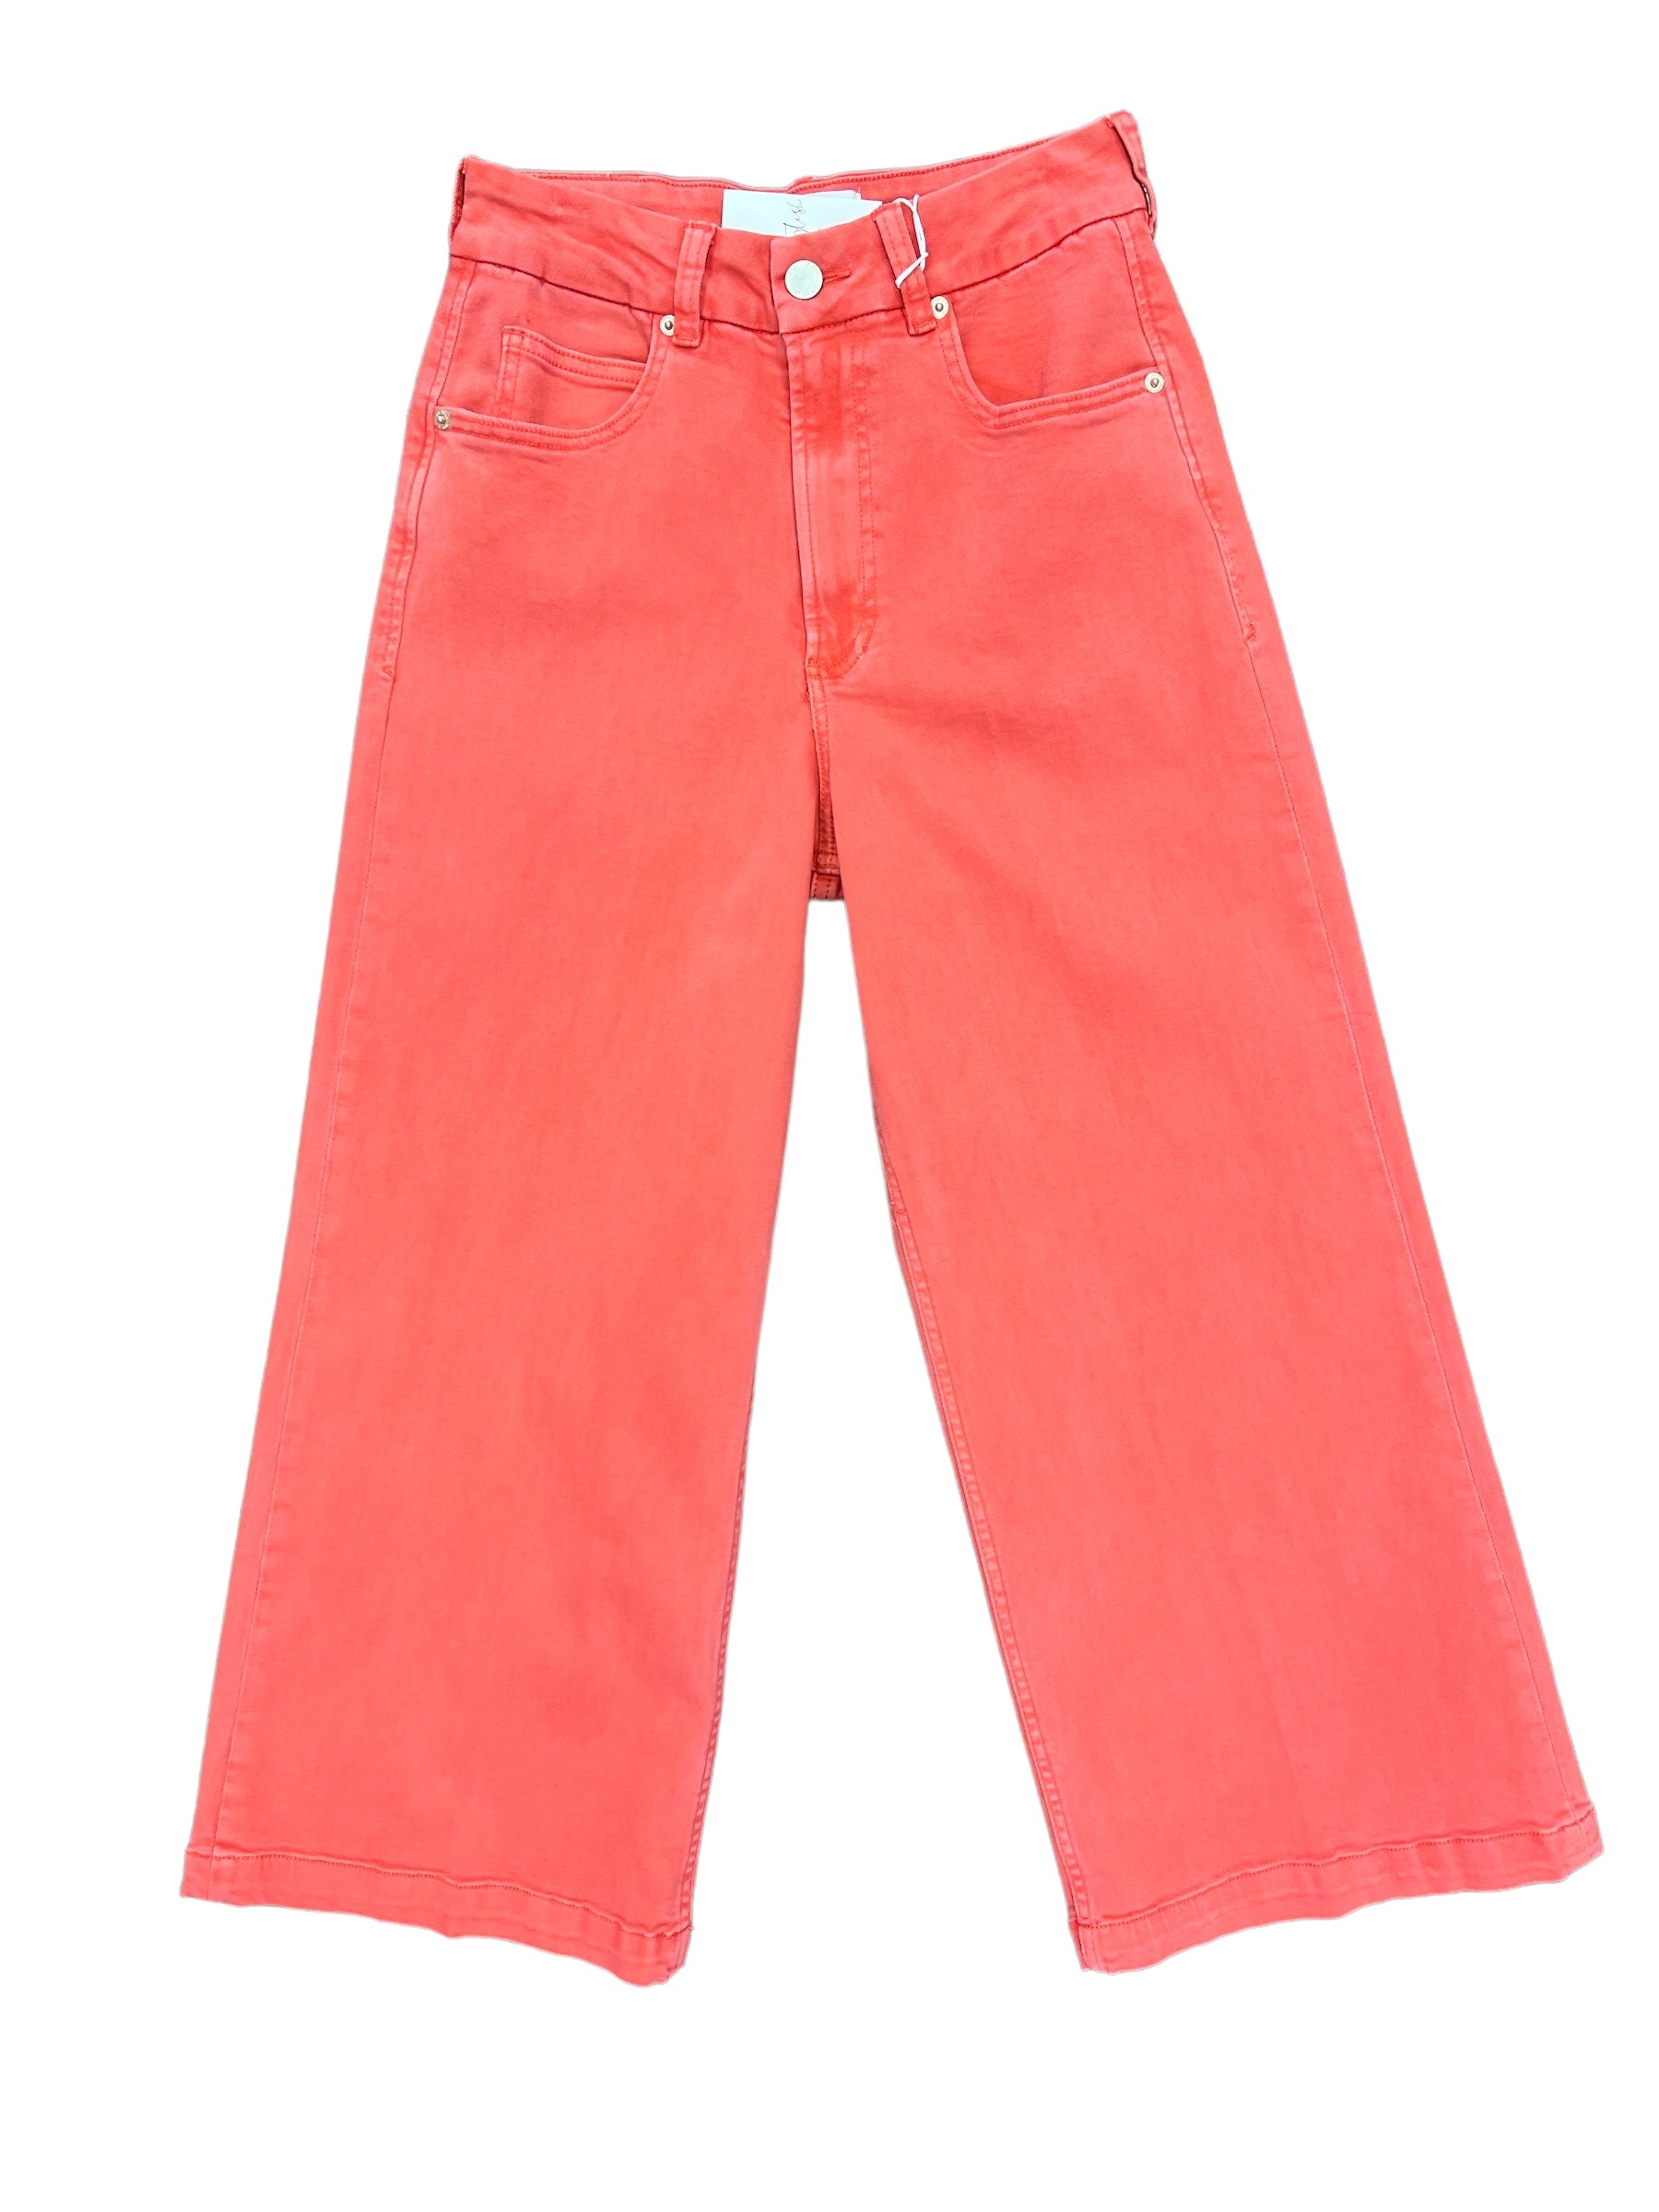 Audrey Pants-230 Pants-Dear John-Simply Stylish Boutique | Women’s & Kid’s Fashion | Paducah, KY